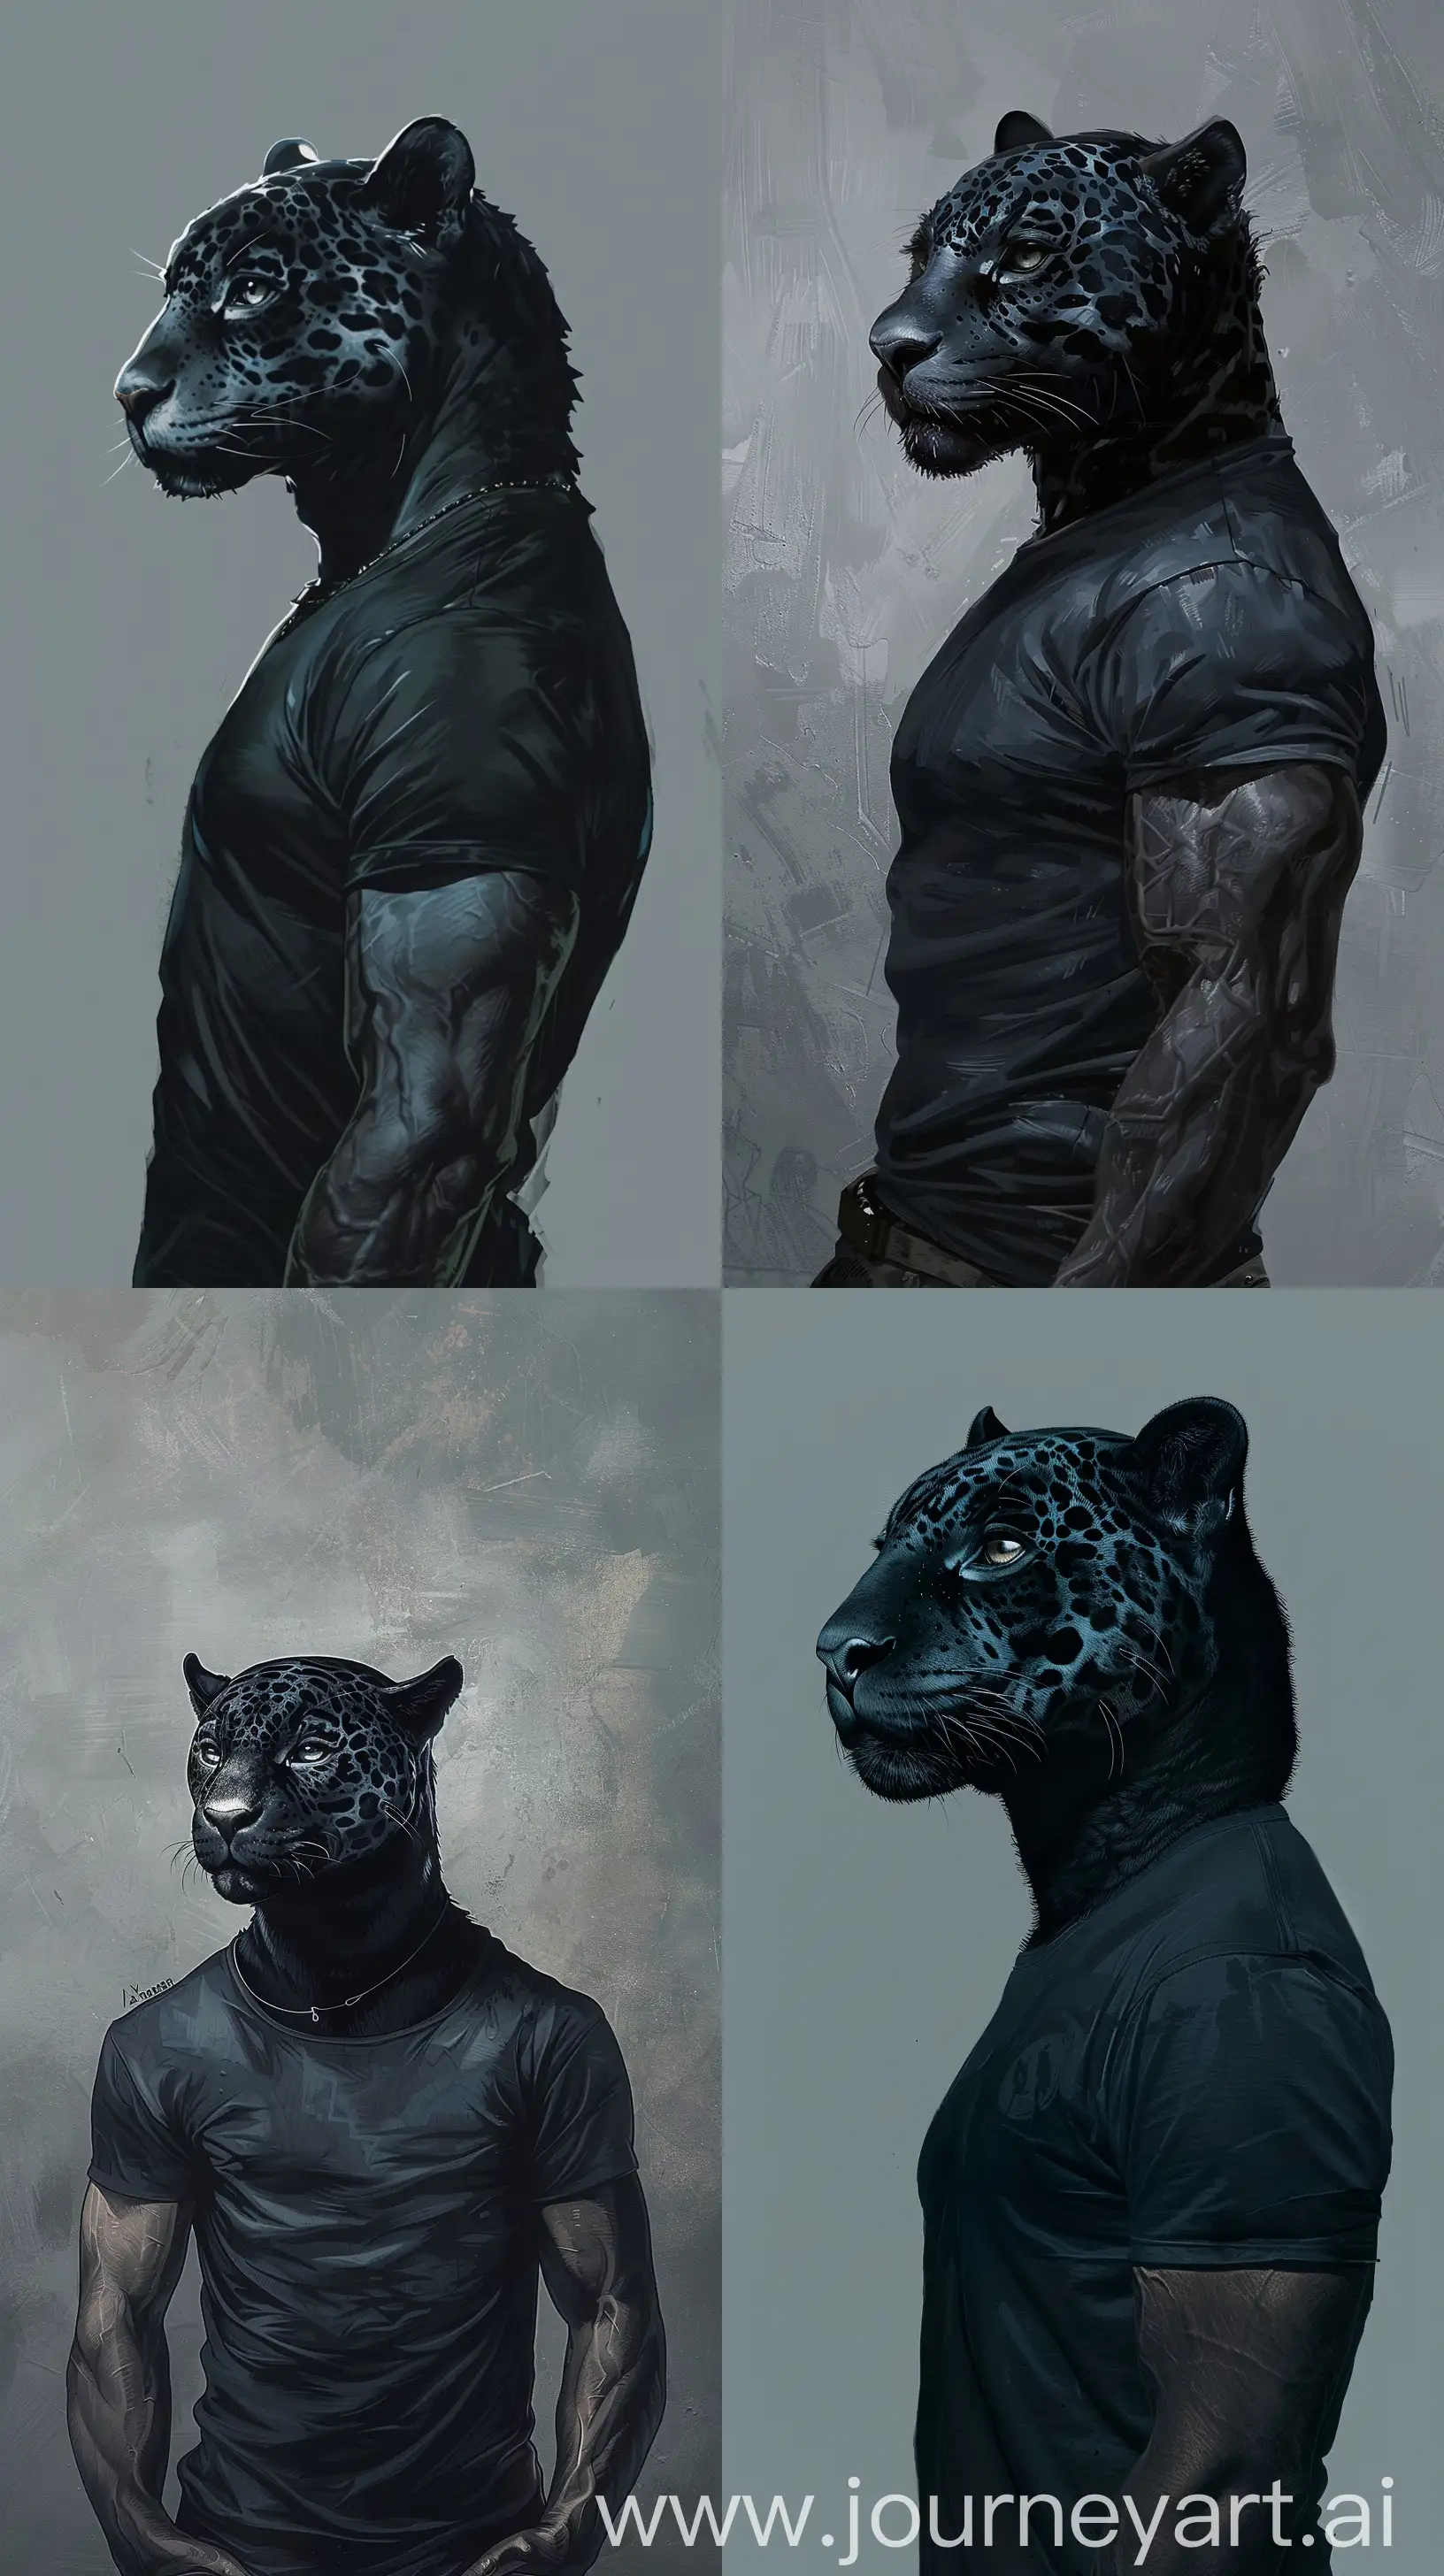 Kees van dongen art style of a black jaguar as a human man with black body wearing a t shirt, as phone wallpaper gray background. --ar 9:16